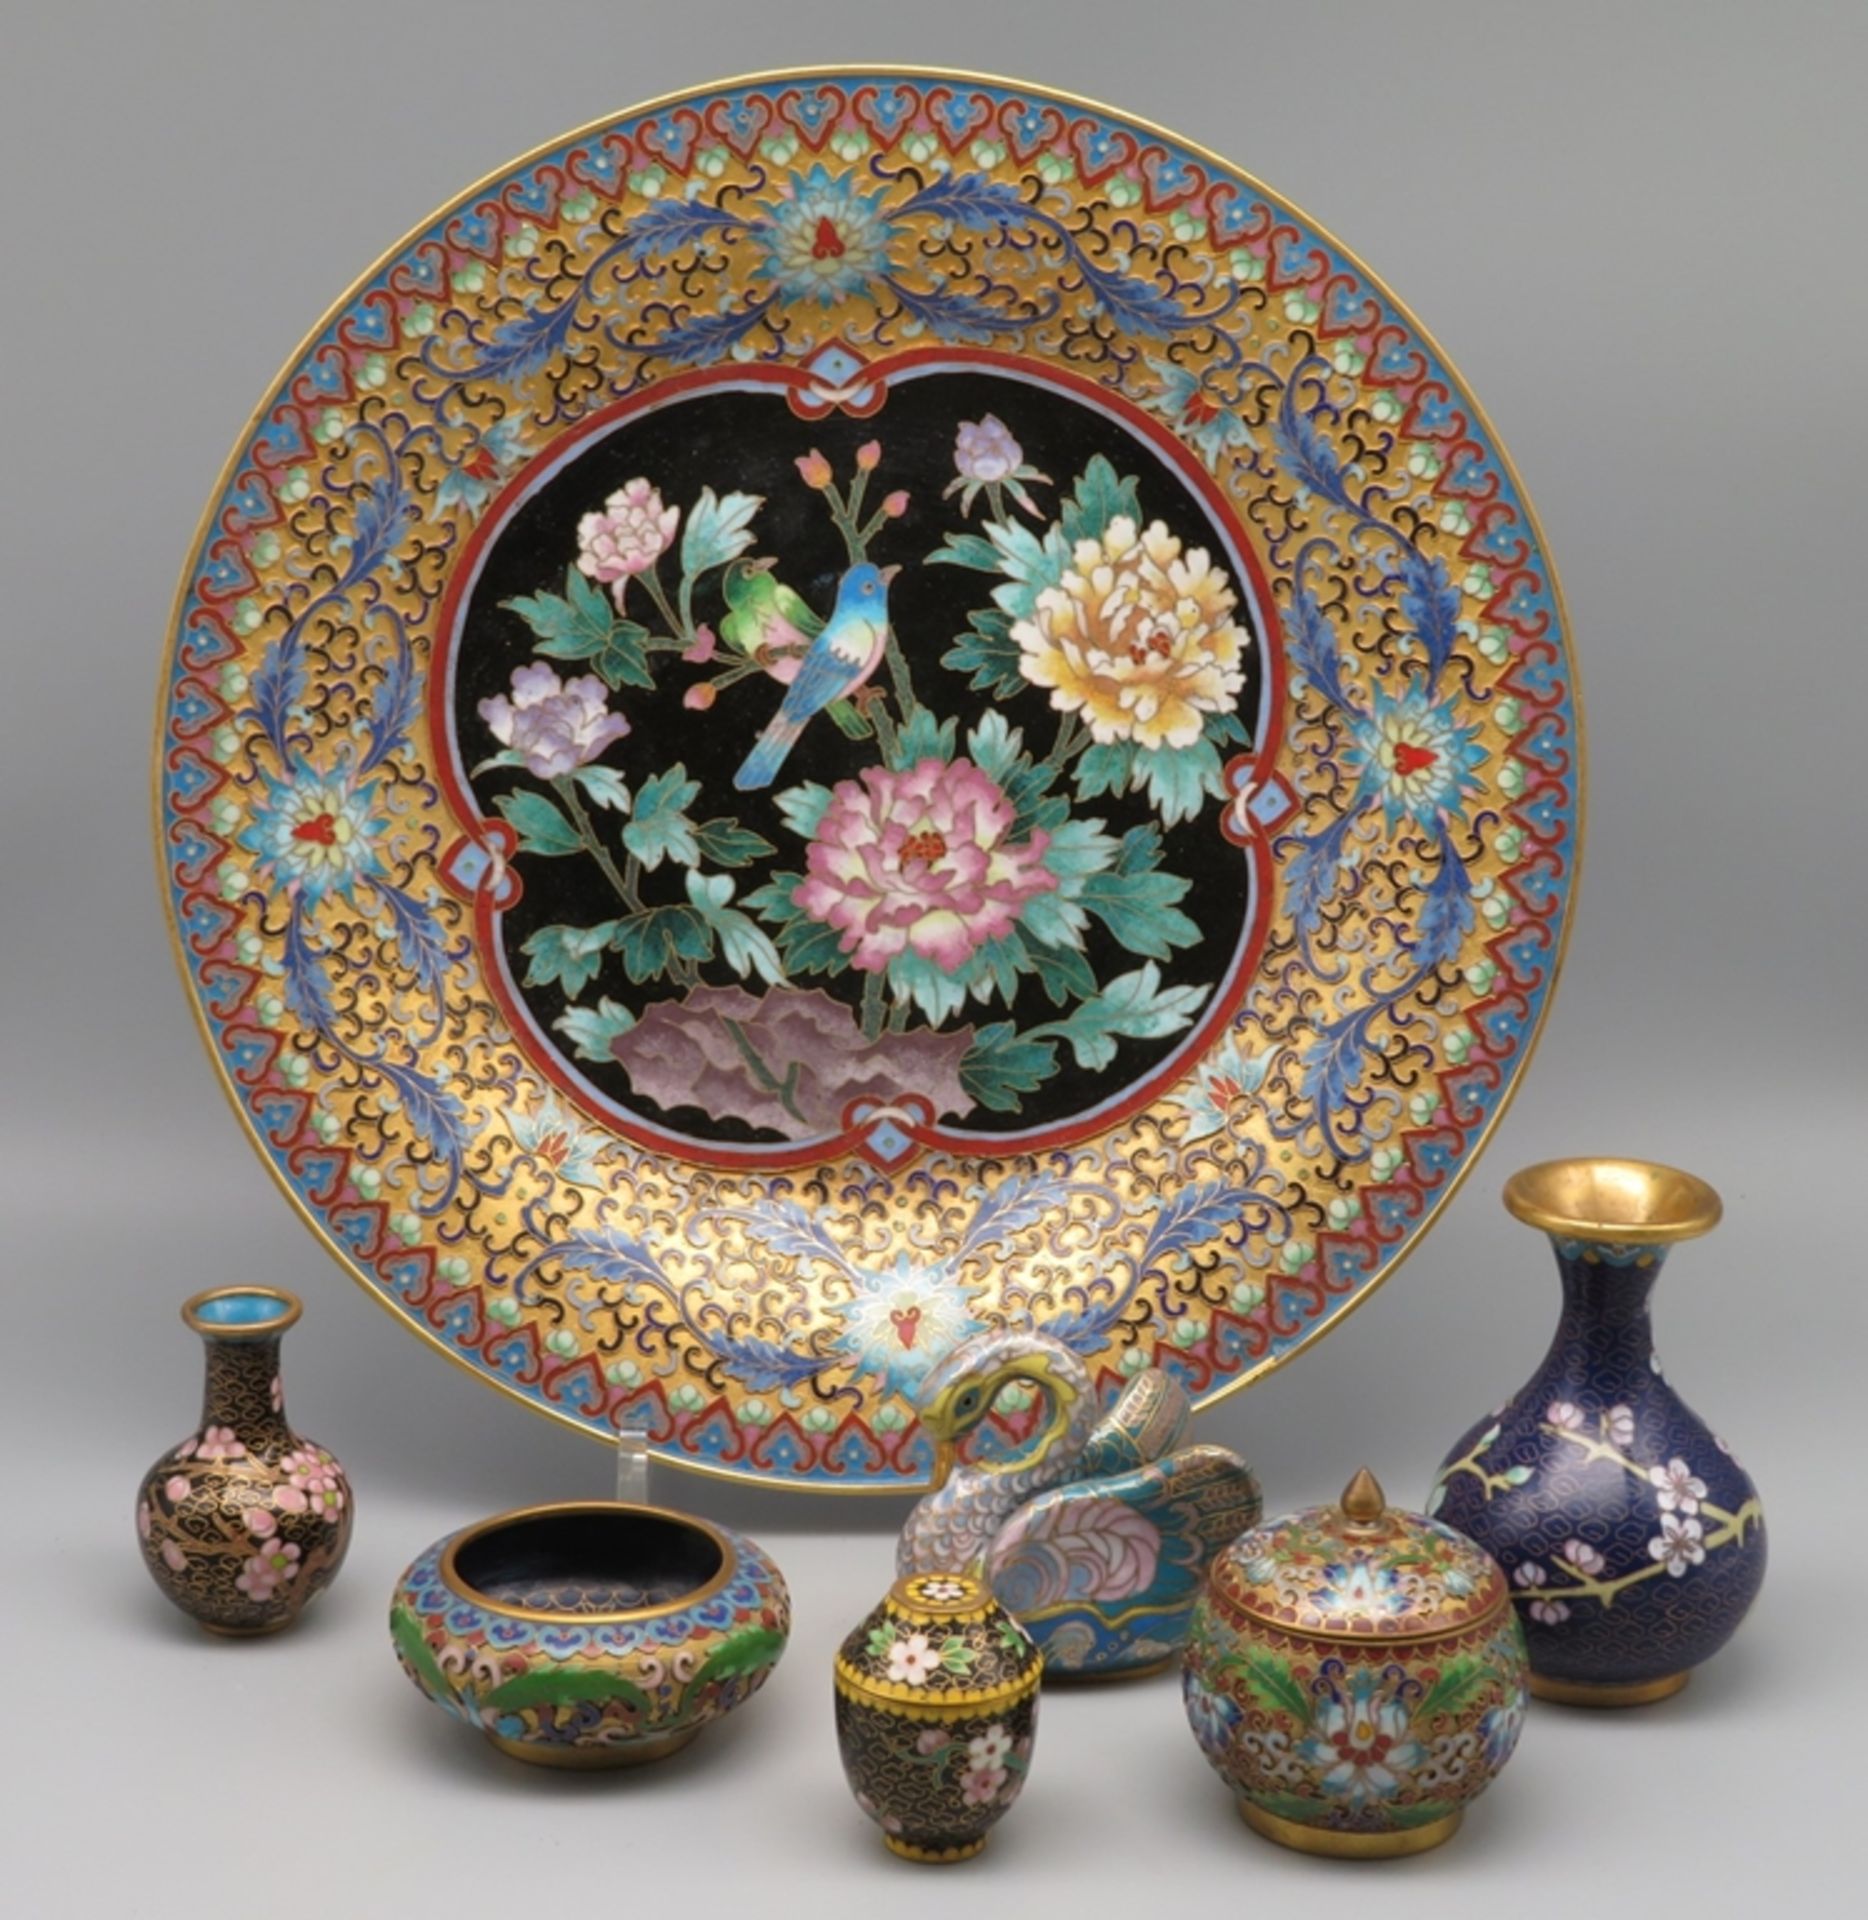 7 teiliges Konvolut diverser Cloisonné Objekte, China, farbiger Zellenschmelz, Teller d 31 cm, höch